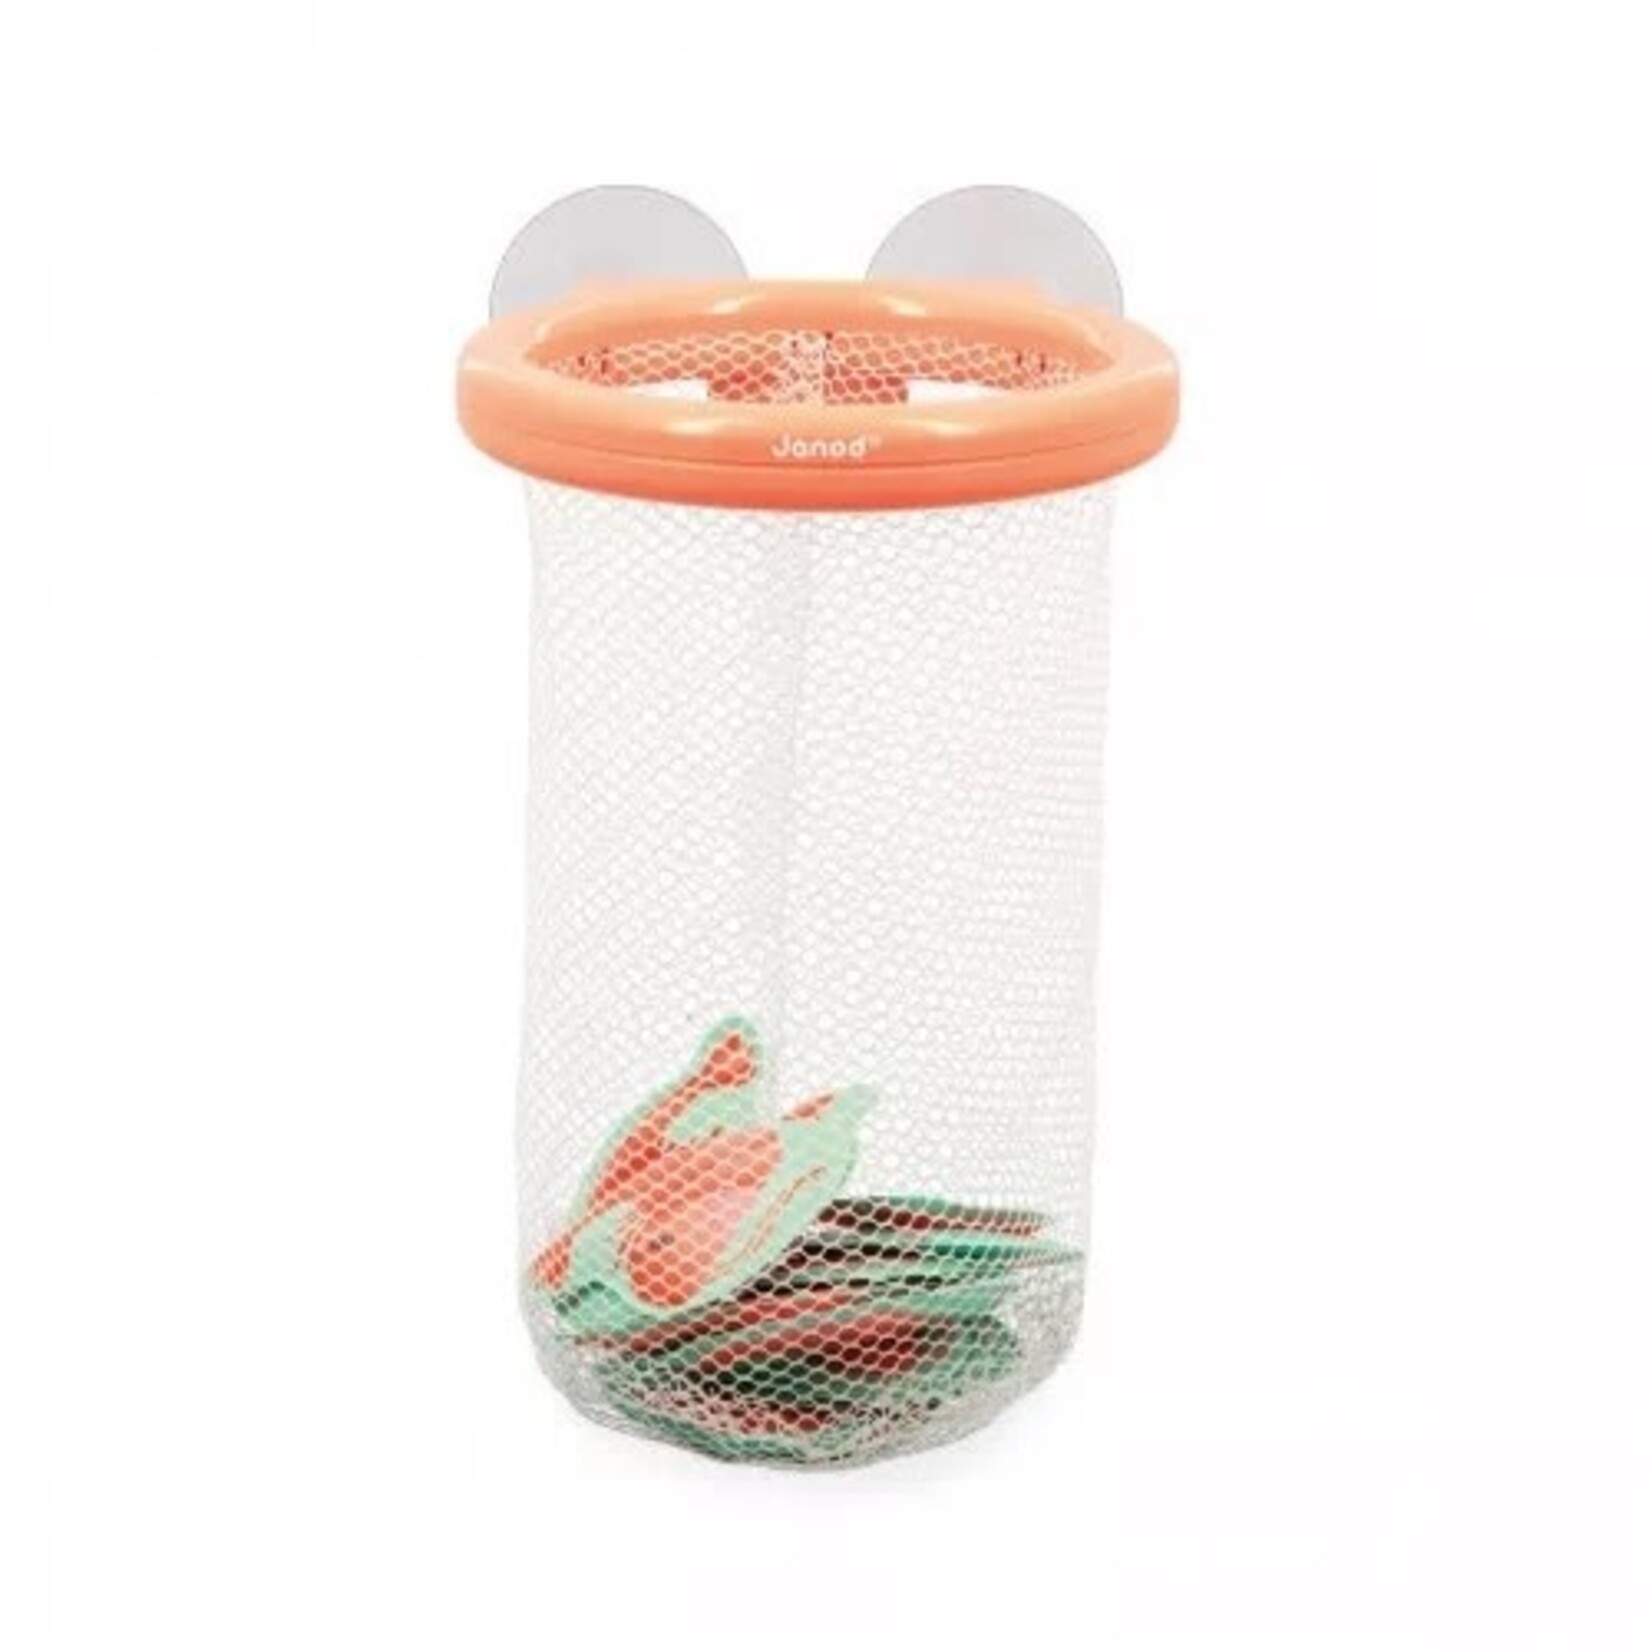 Janod JANOD - Bath toy 'Shrimp catcher'